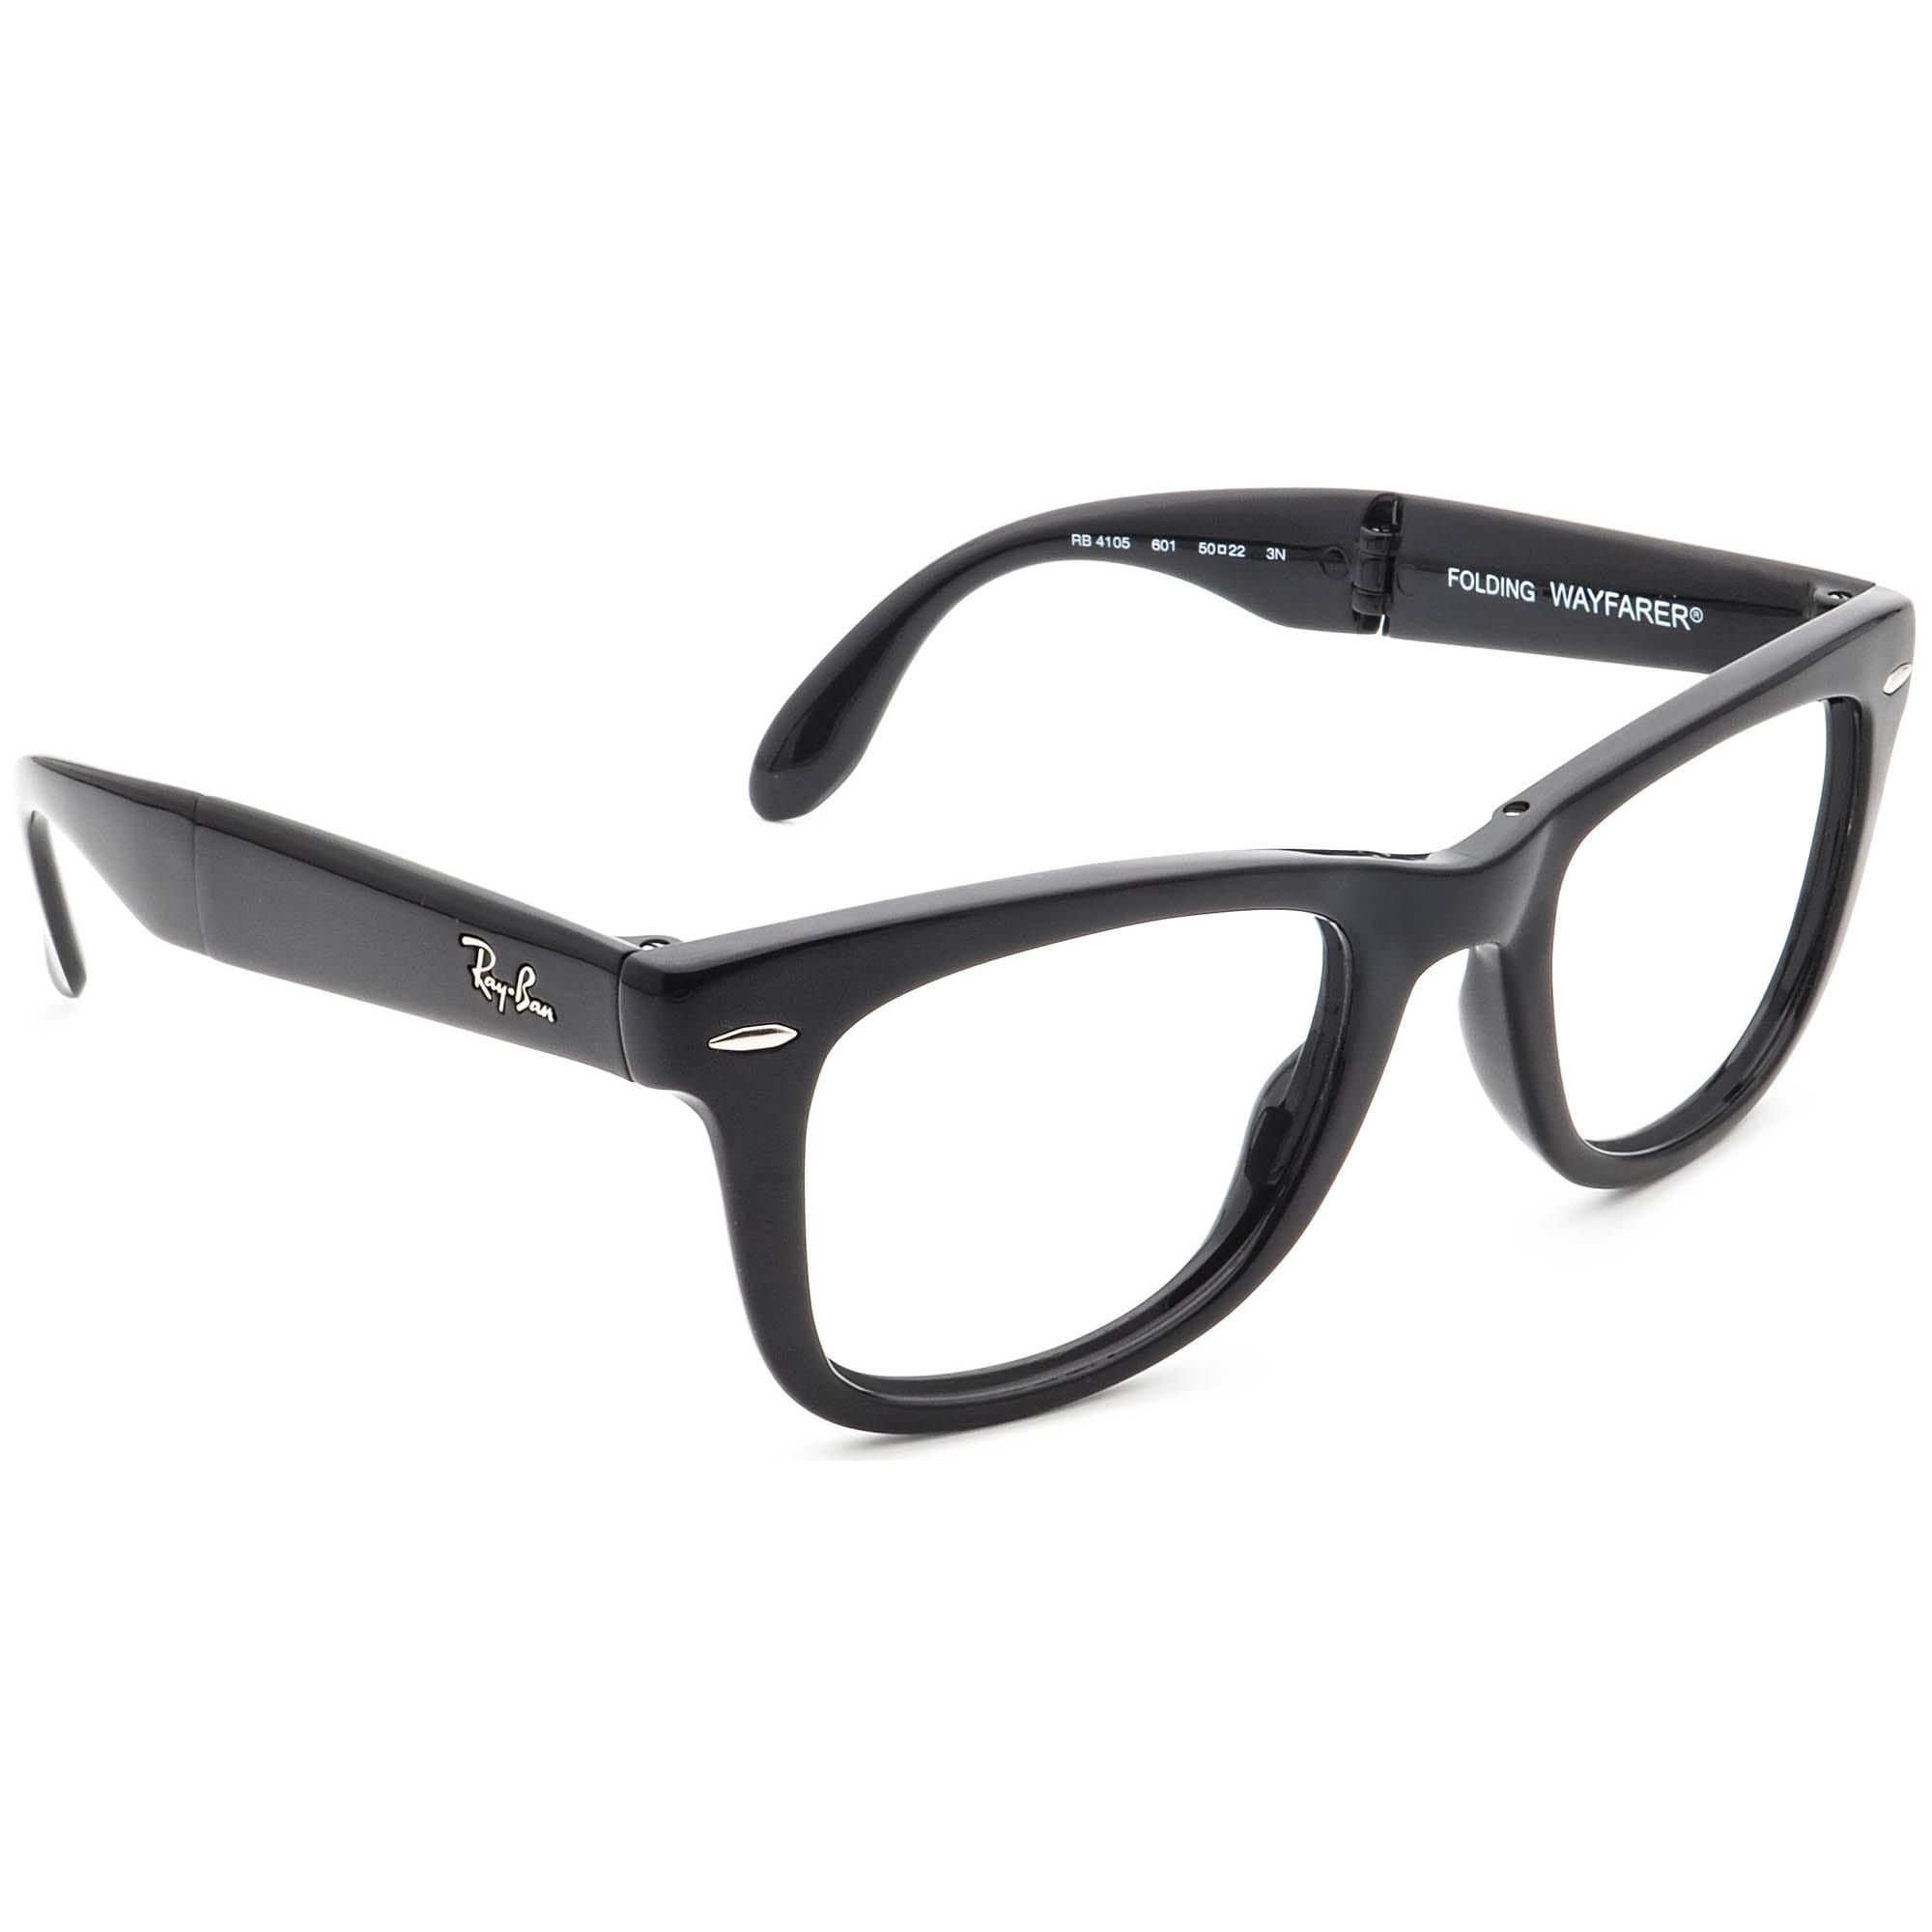 Ray-ban Sunglasses Frame Only RB 4105 601 Folding Wayfarer - Etsy